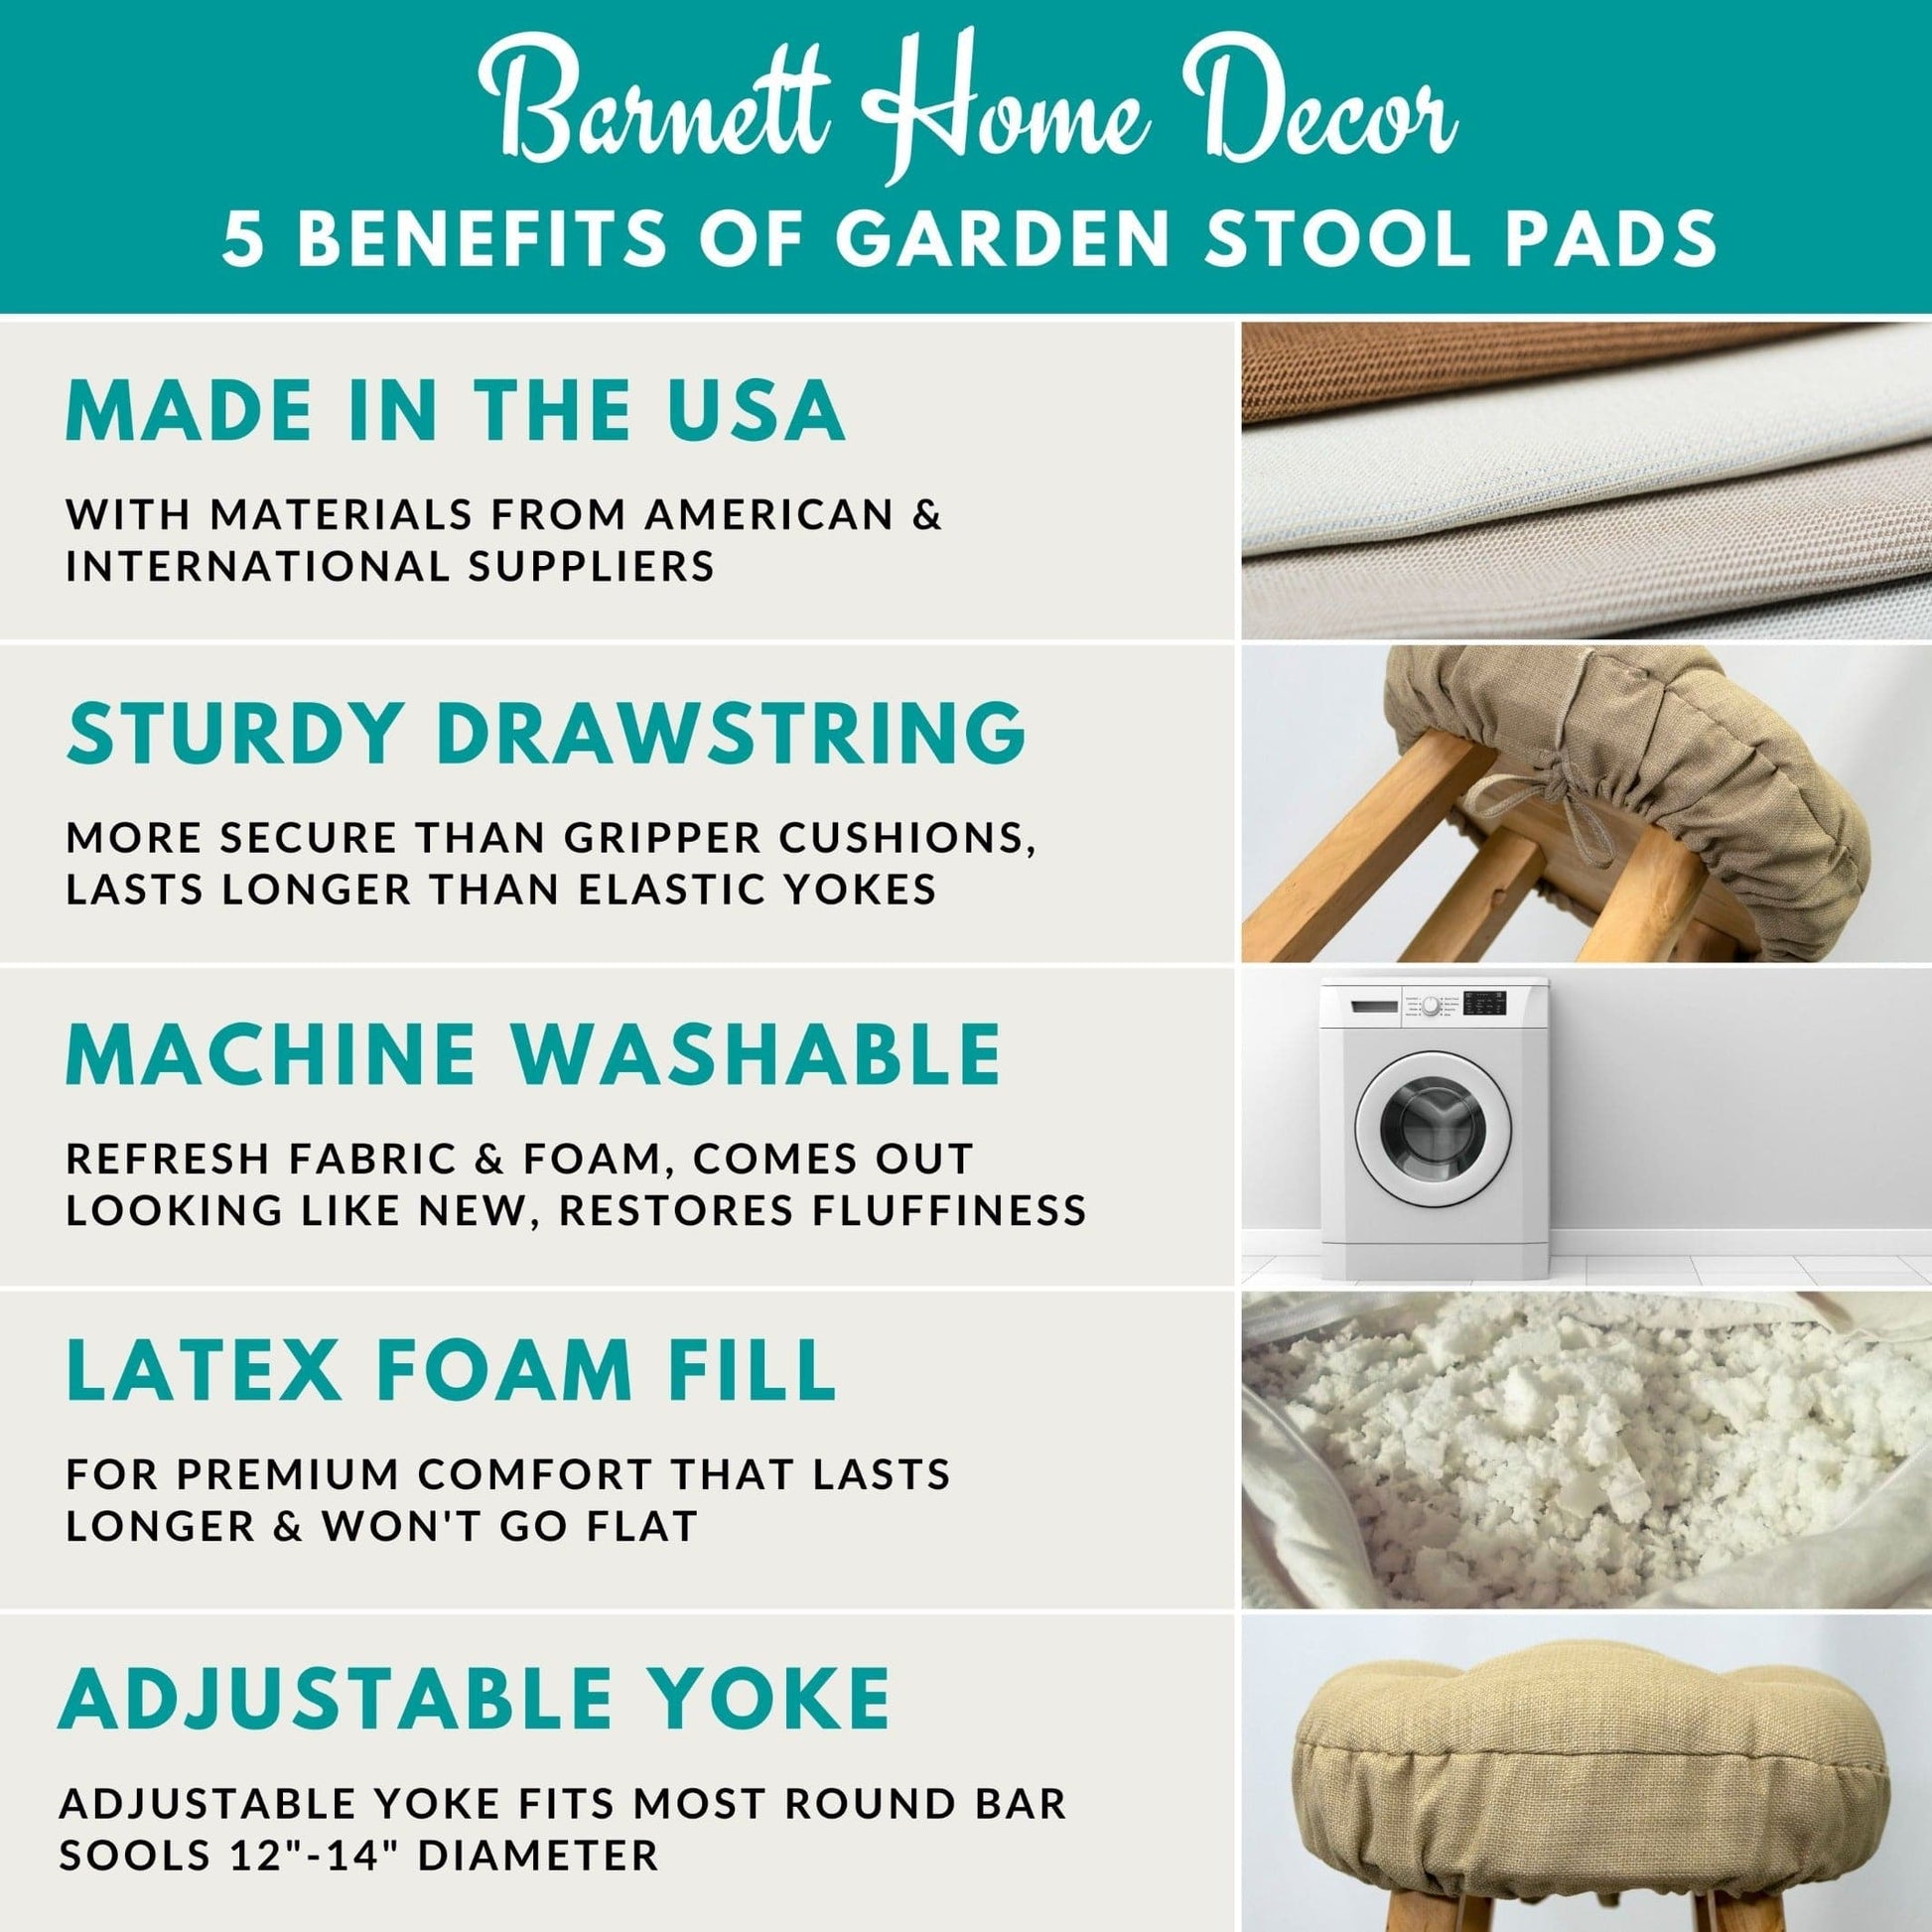 Barnett Home Decor - Benefits of Garden Stool Pads - Made in USA - Sturdy Drawstring - Machine Washable - Latex Foam Fill - Adjustable Yoke